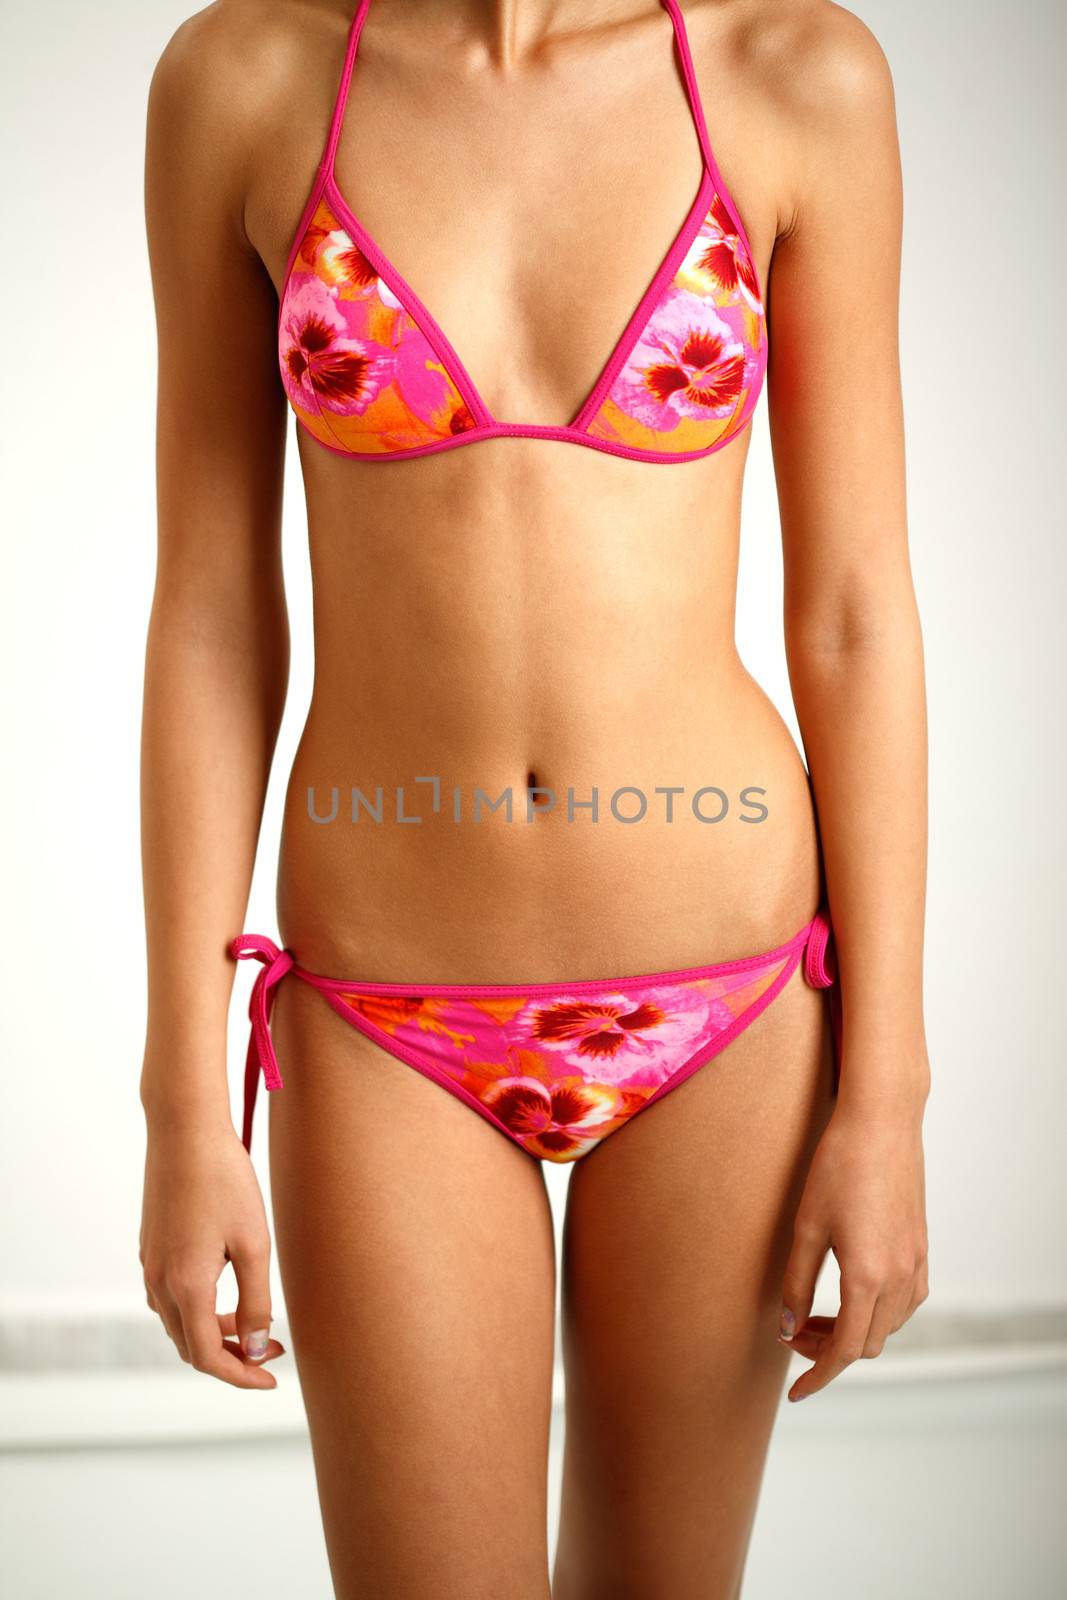 Young girl body in purple bikini swinsuit